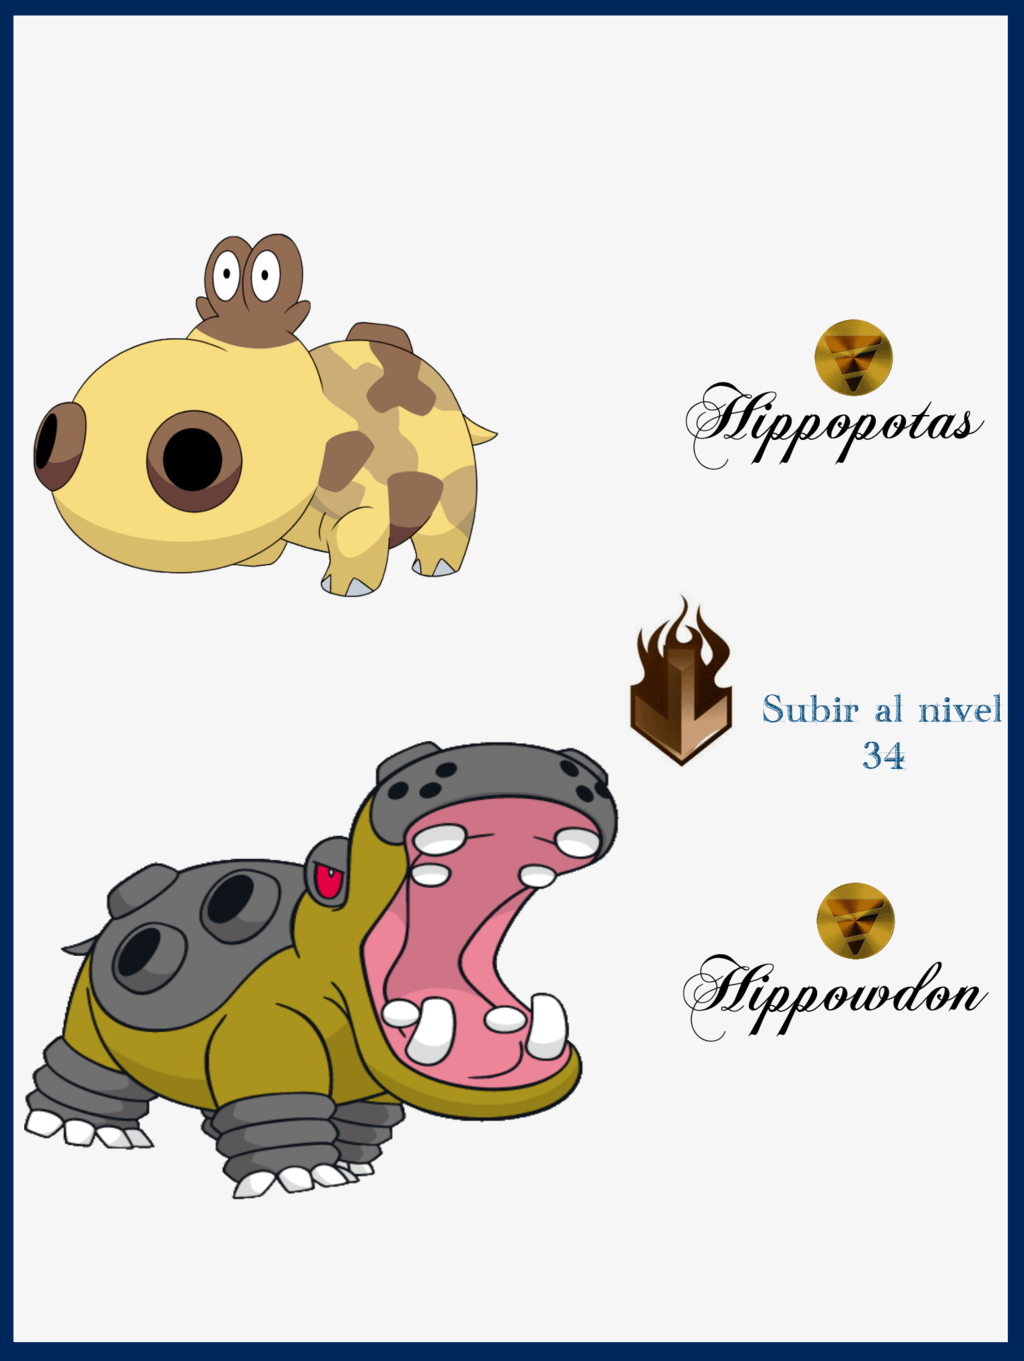 Pokemon Hippopotas. Hippopotas Image. Pokemon Image. Hippo luv